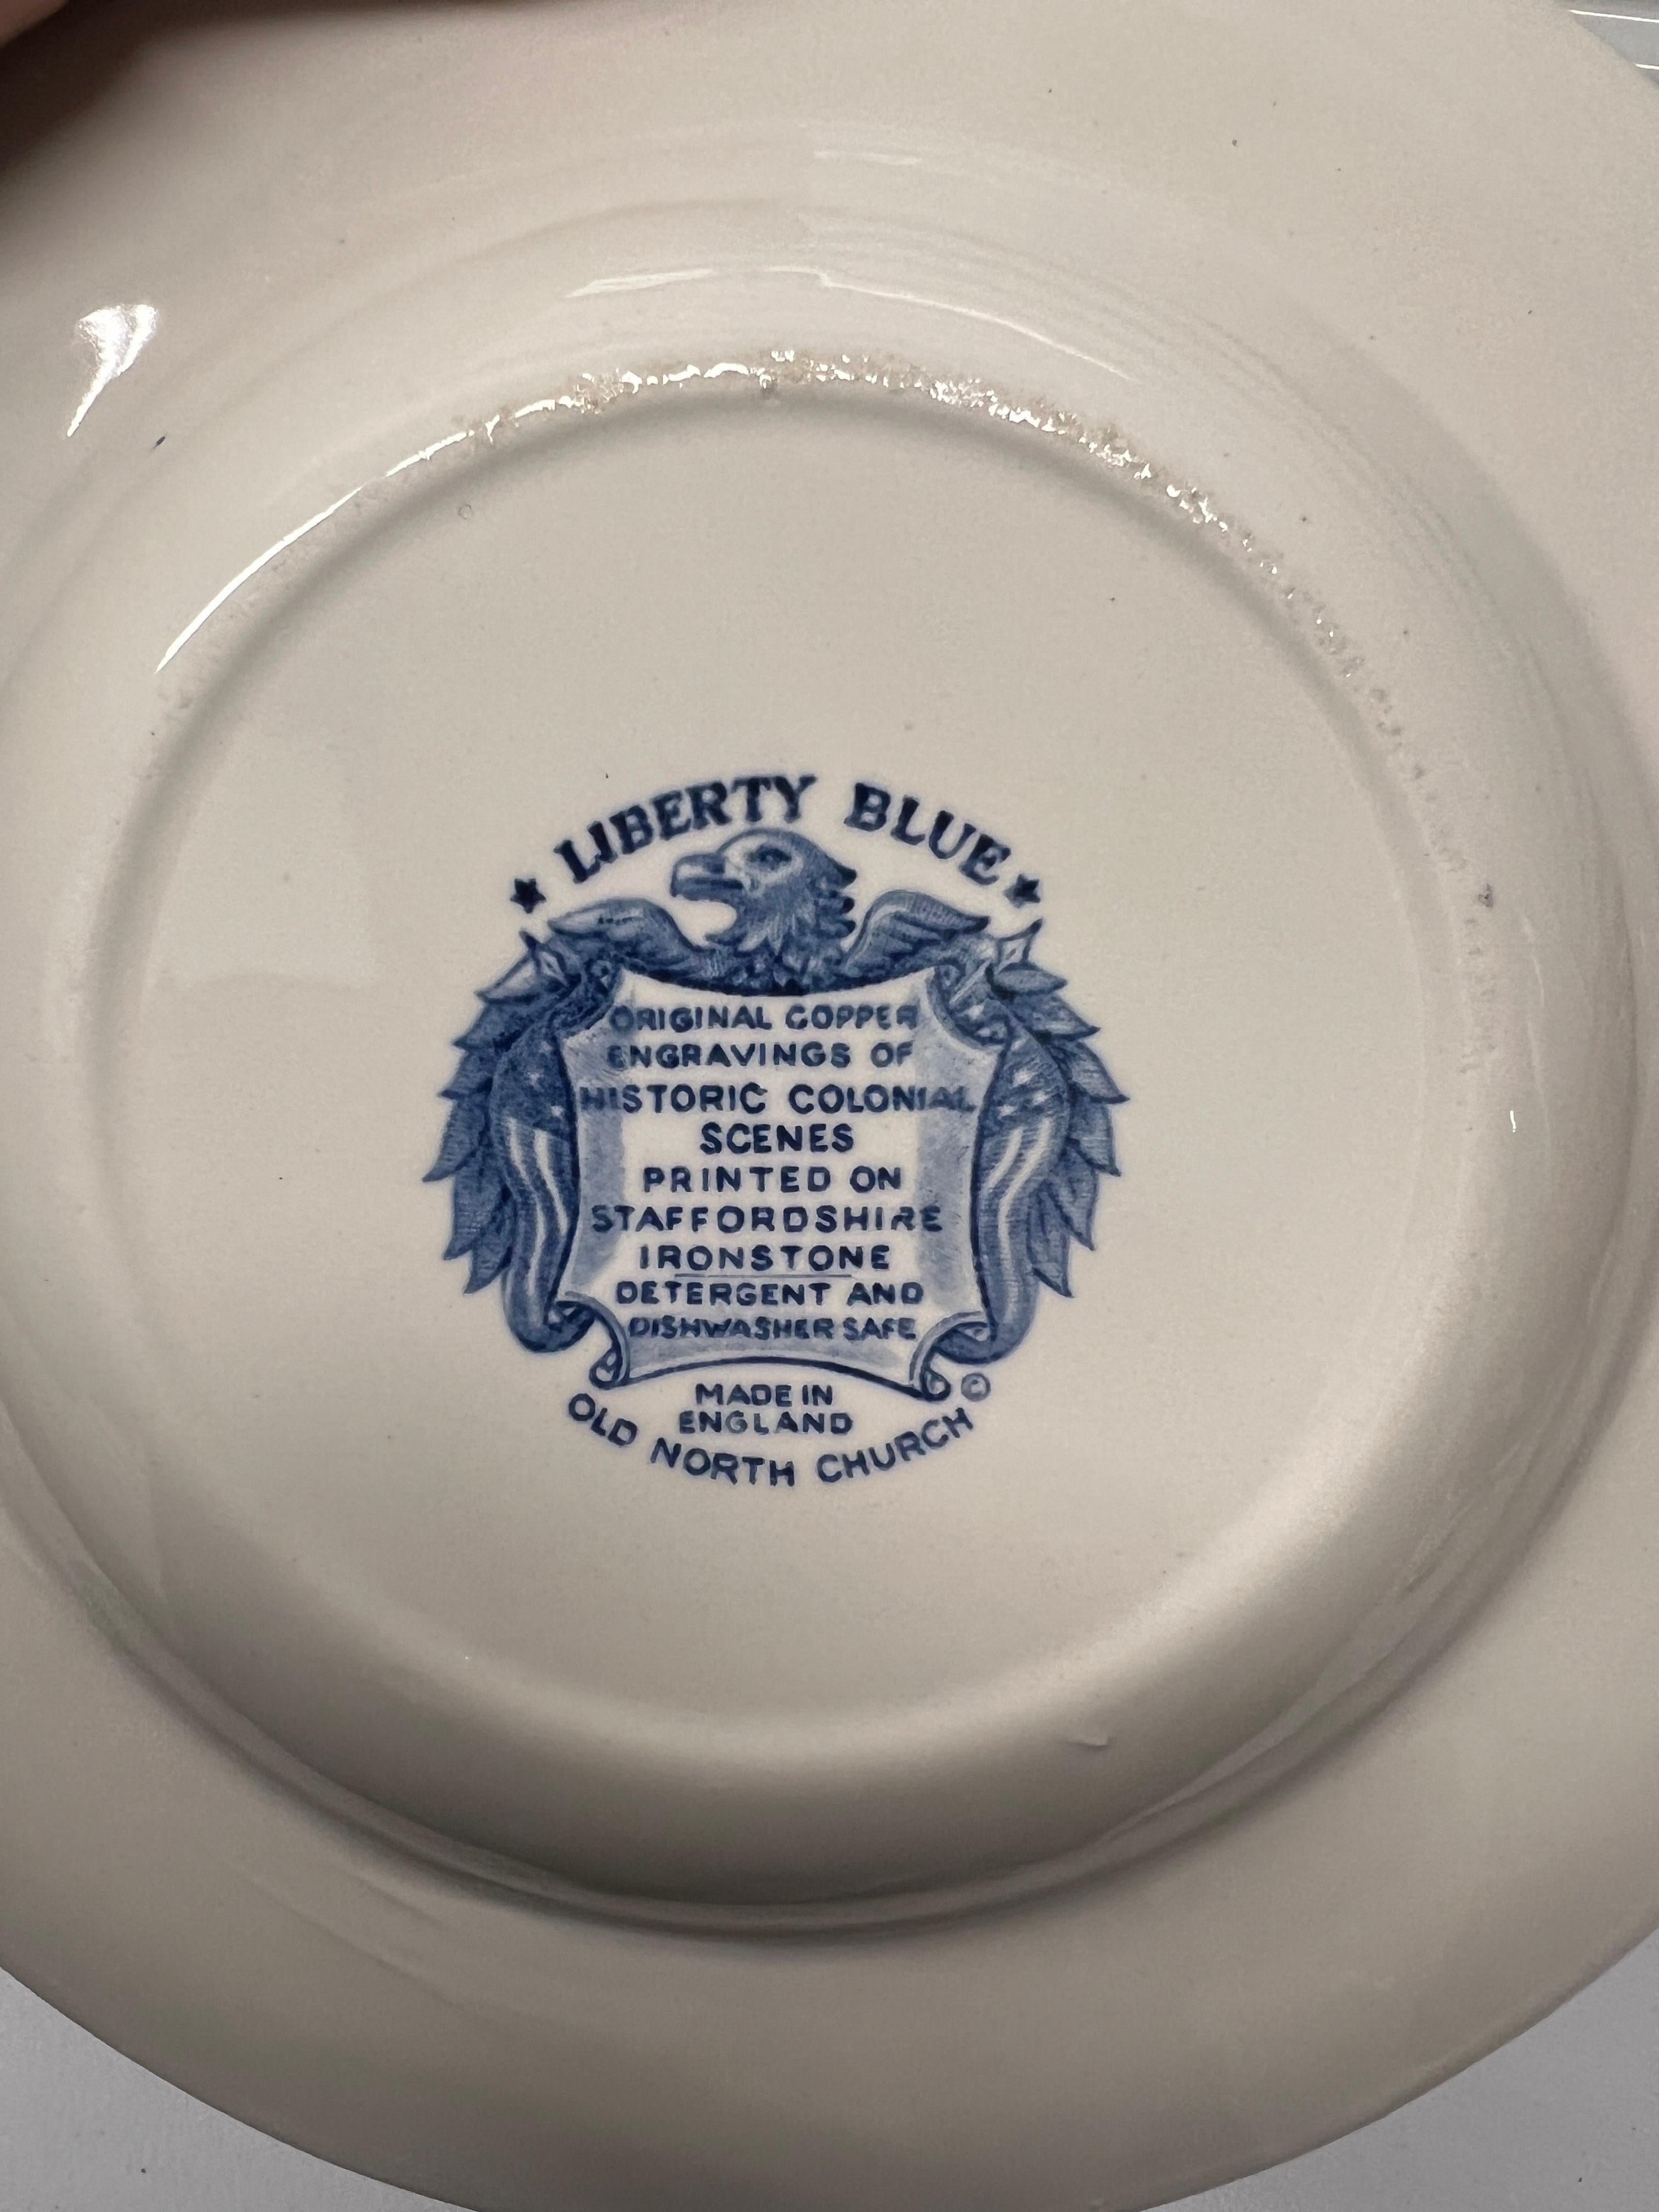 Ceramic 59 Pc, Liberty Blue Staffordshire Ironstone Blue & White China Set 